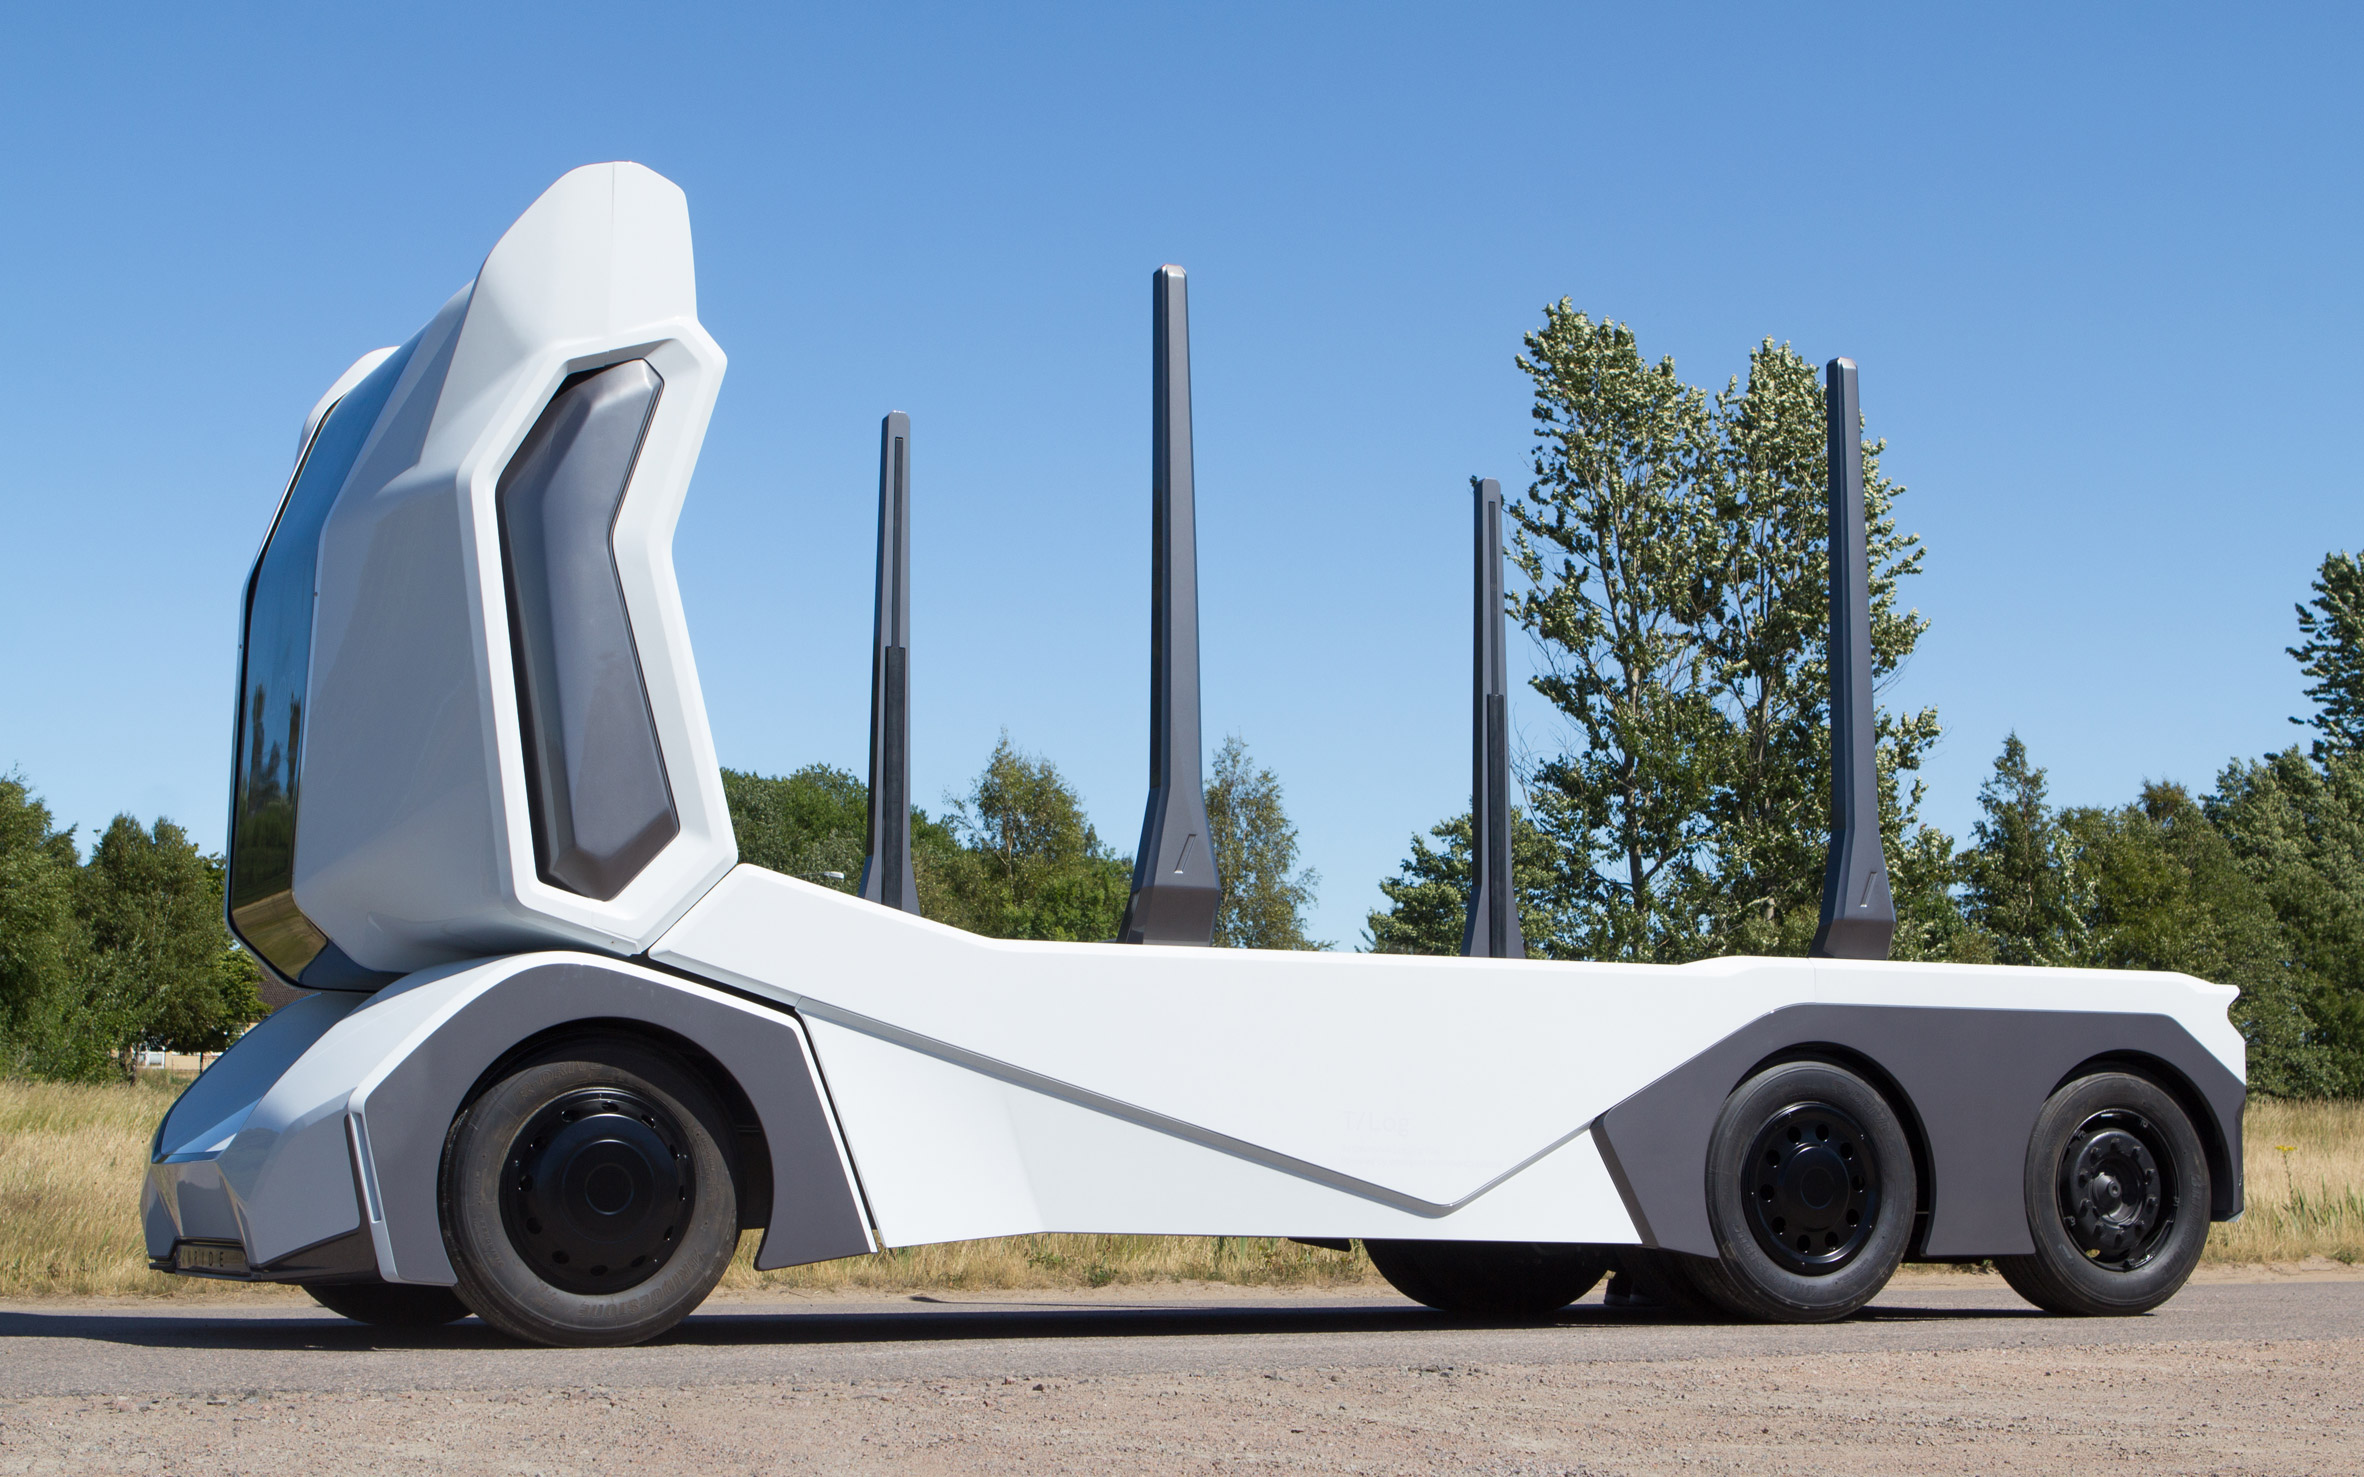 Einride reveals driverless all-electric logging truck